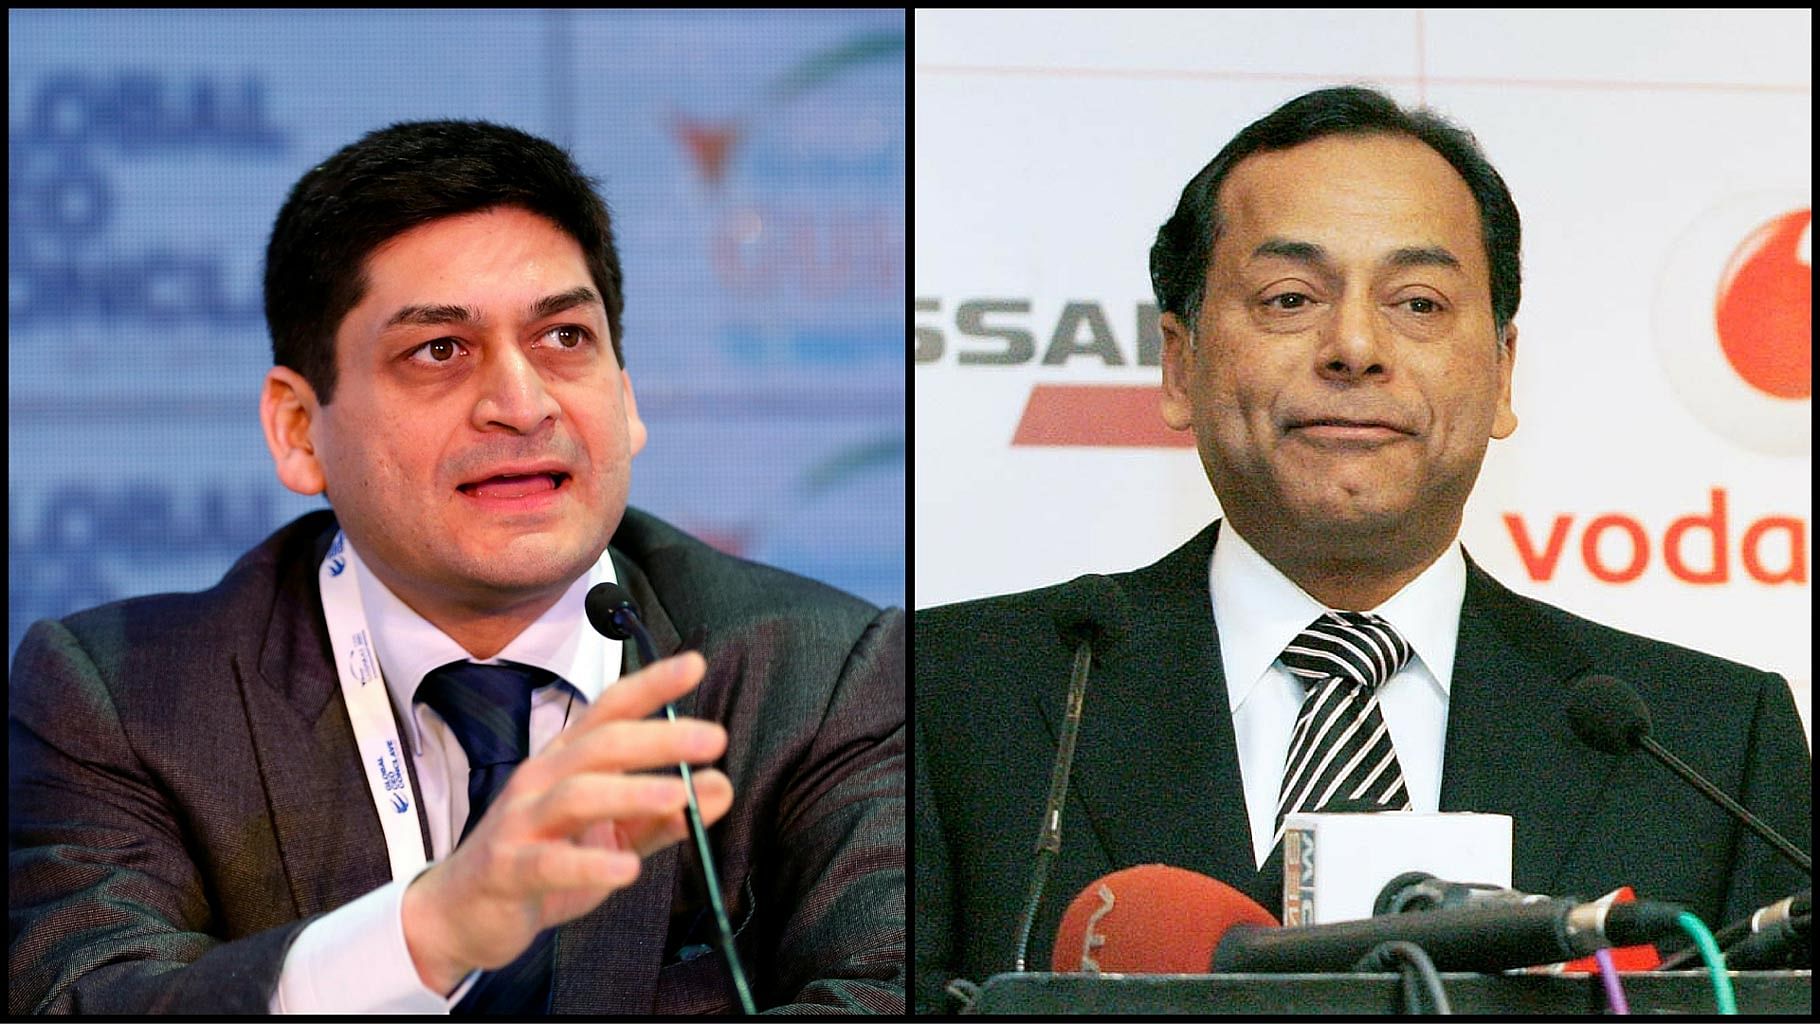 Essar Chief Executive Prashant Ruia (left) and Vice Chairman Ravi Ruia. (Photo: Reuters/<b>The Quint</b>)